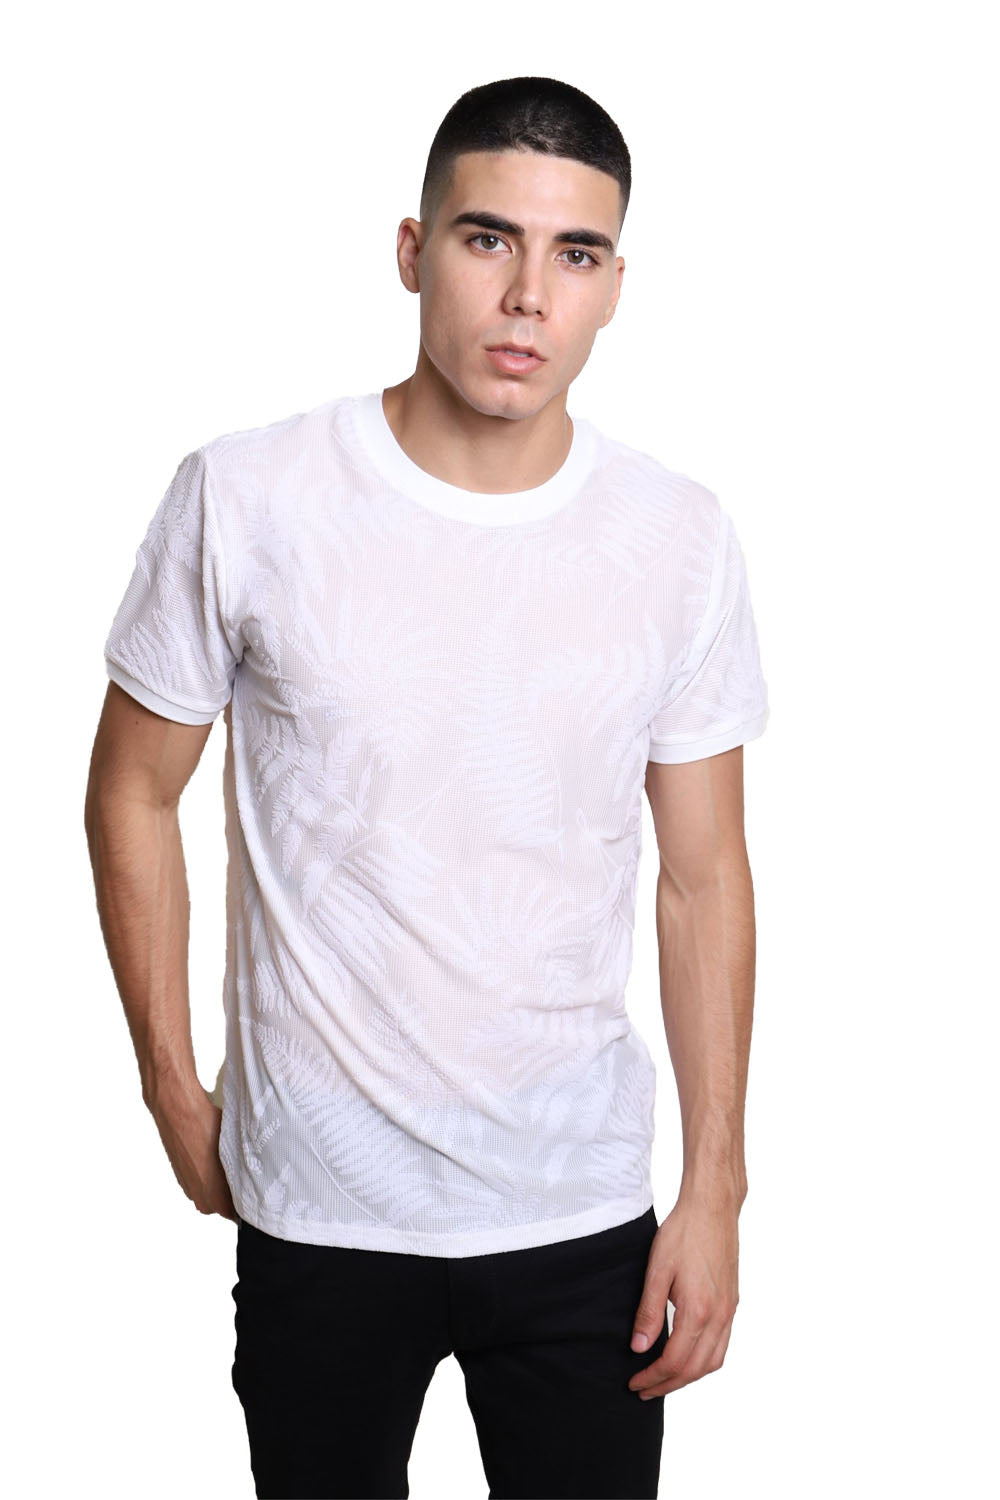 BARABAS men's leaf textured fabric crew neck black white T-Shirt SP505 White